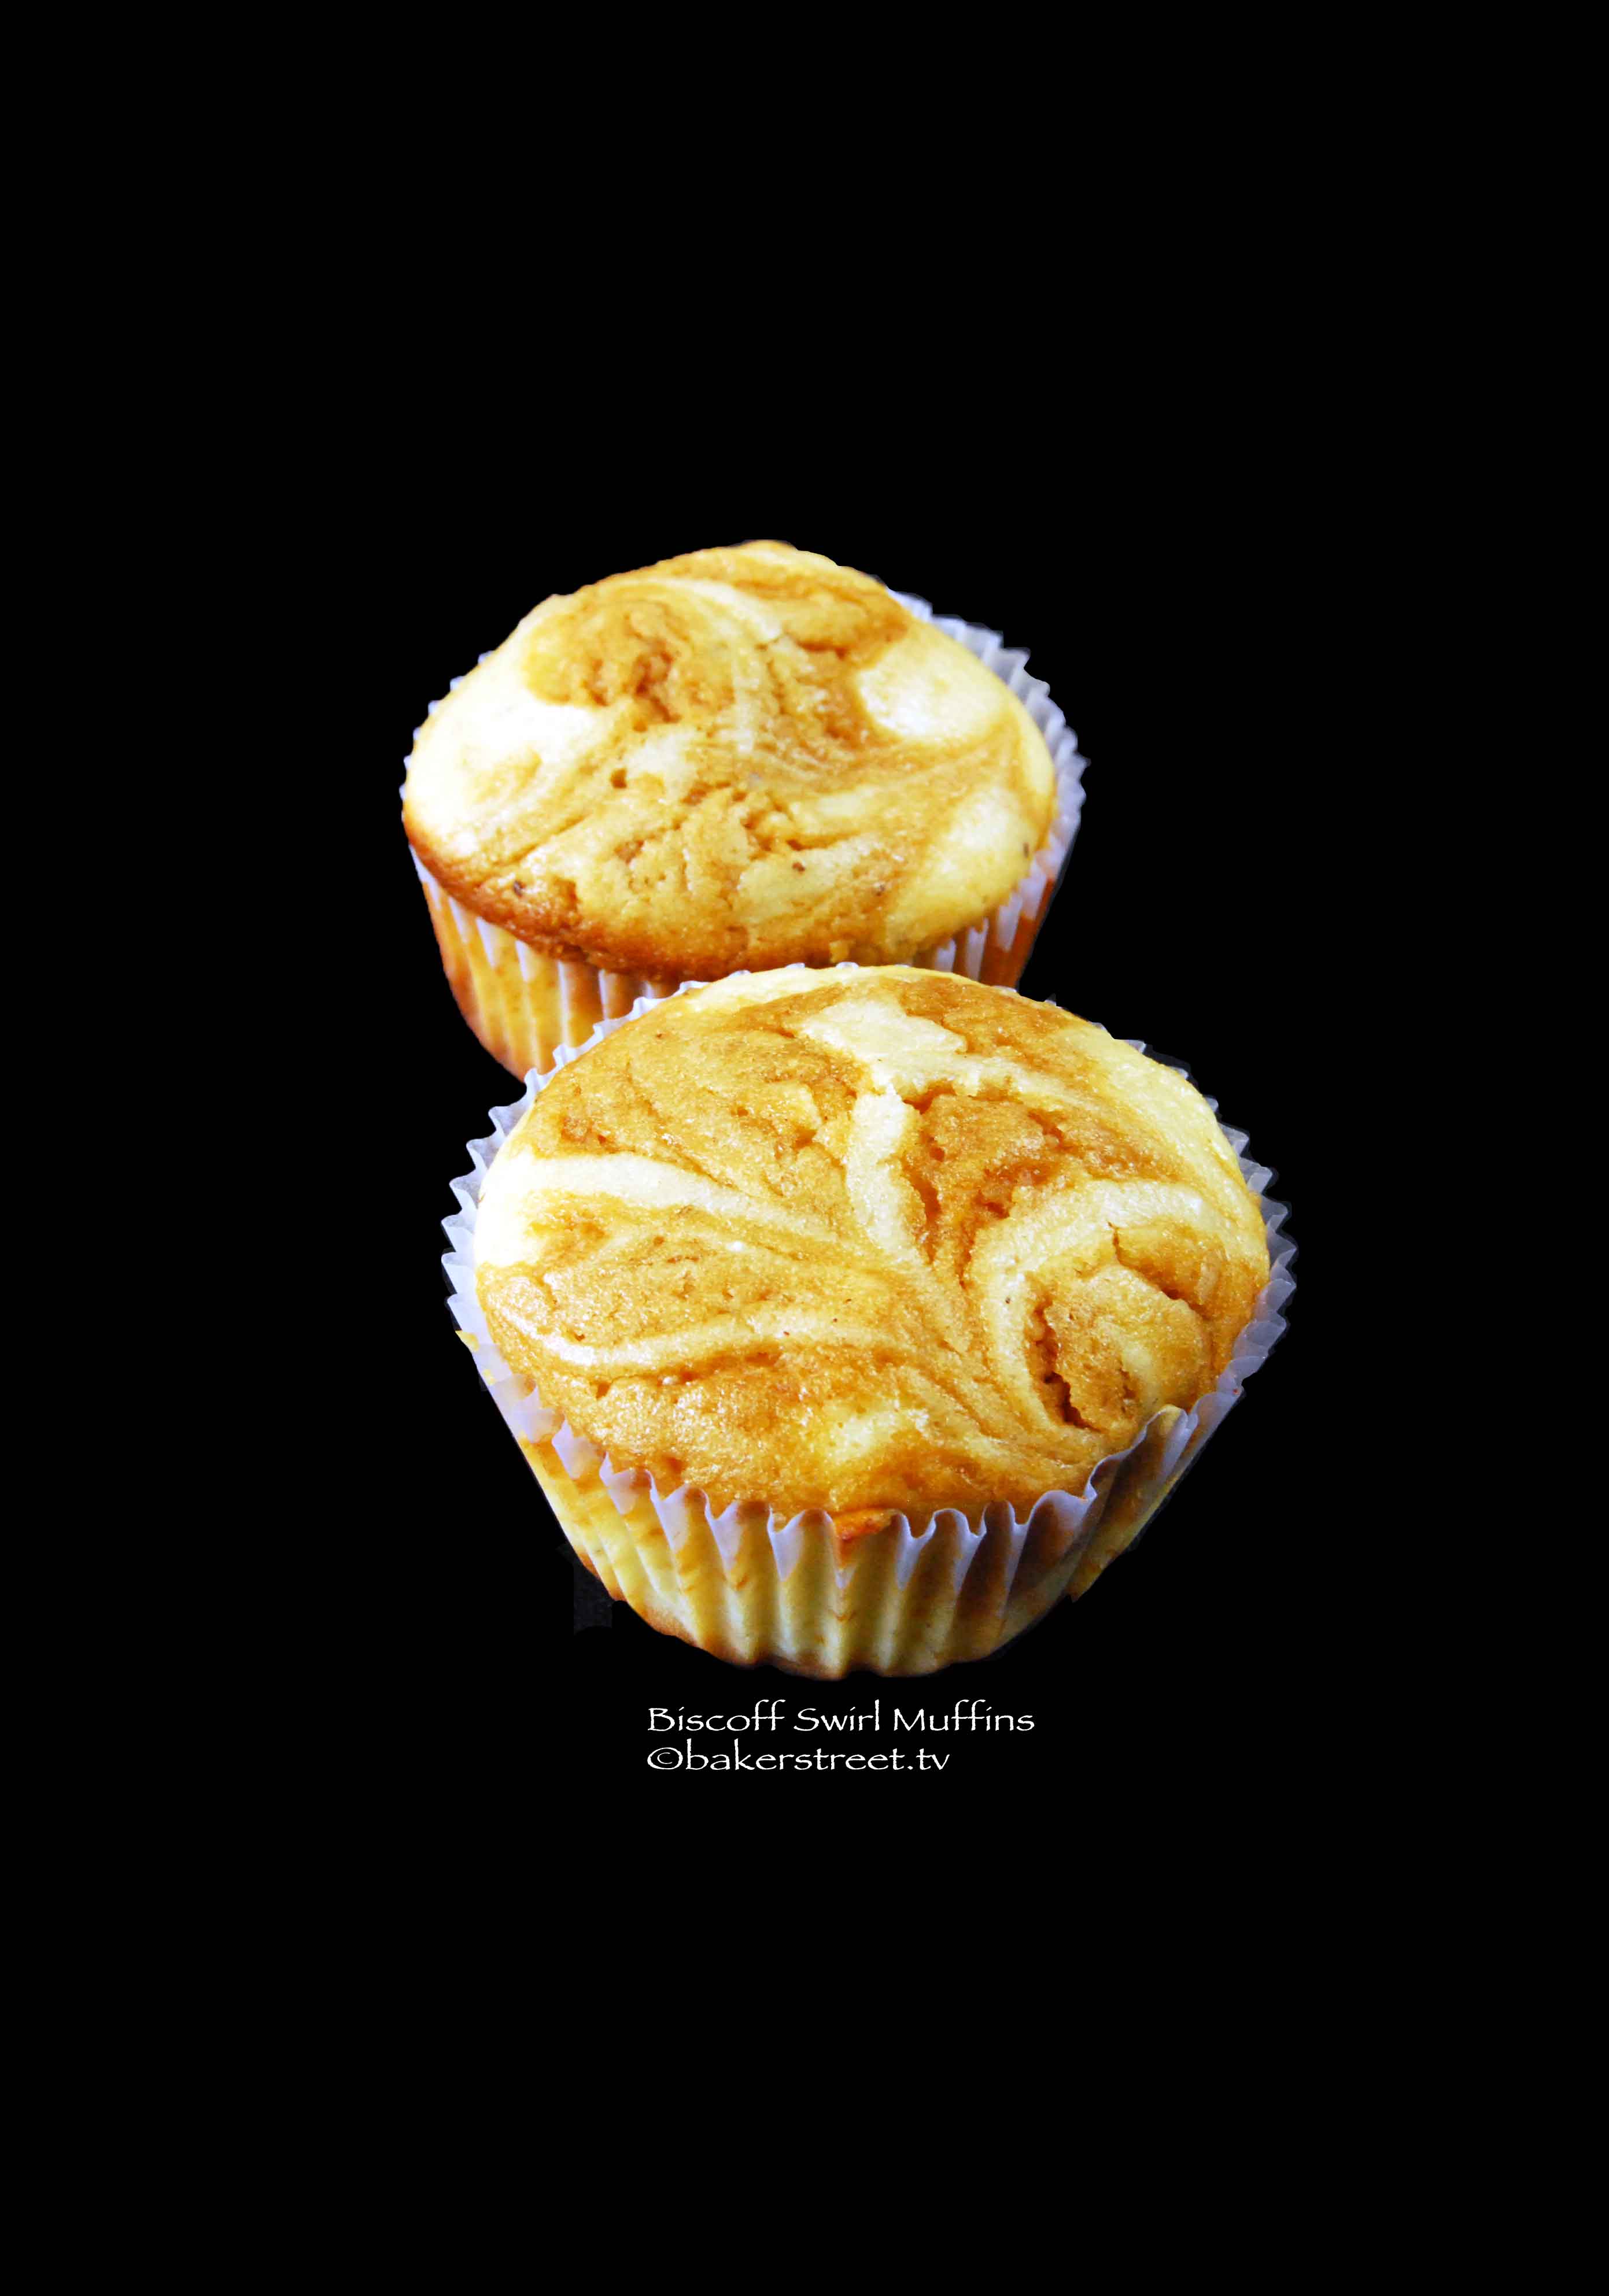 Biscoff Swirl Muffins from Bakerstreet.tv